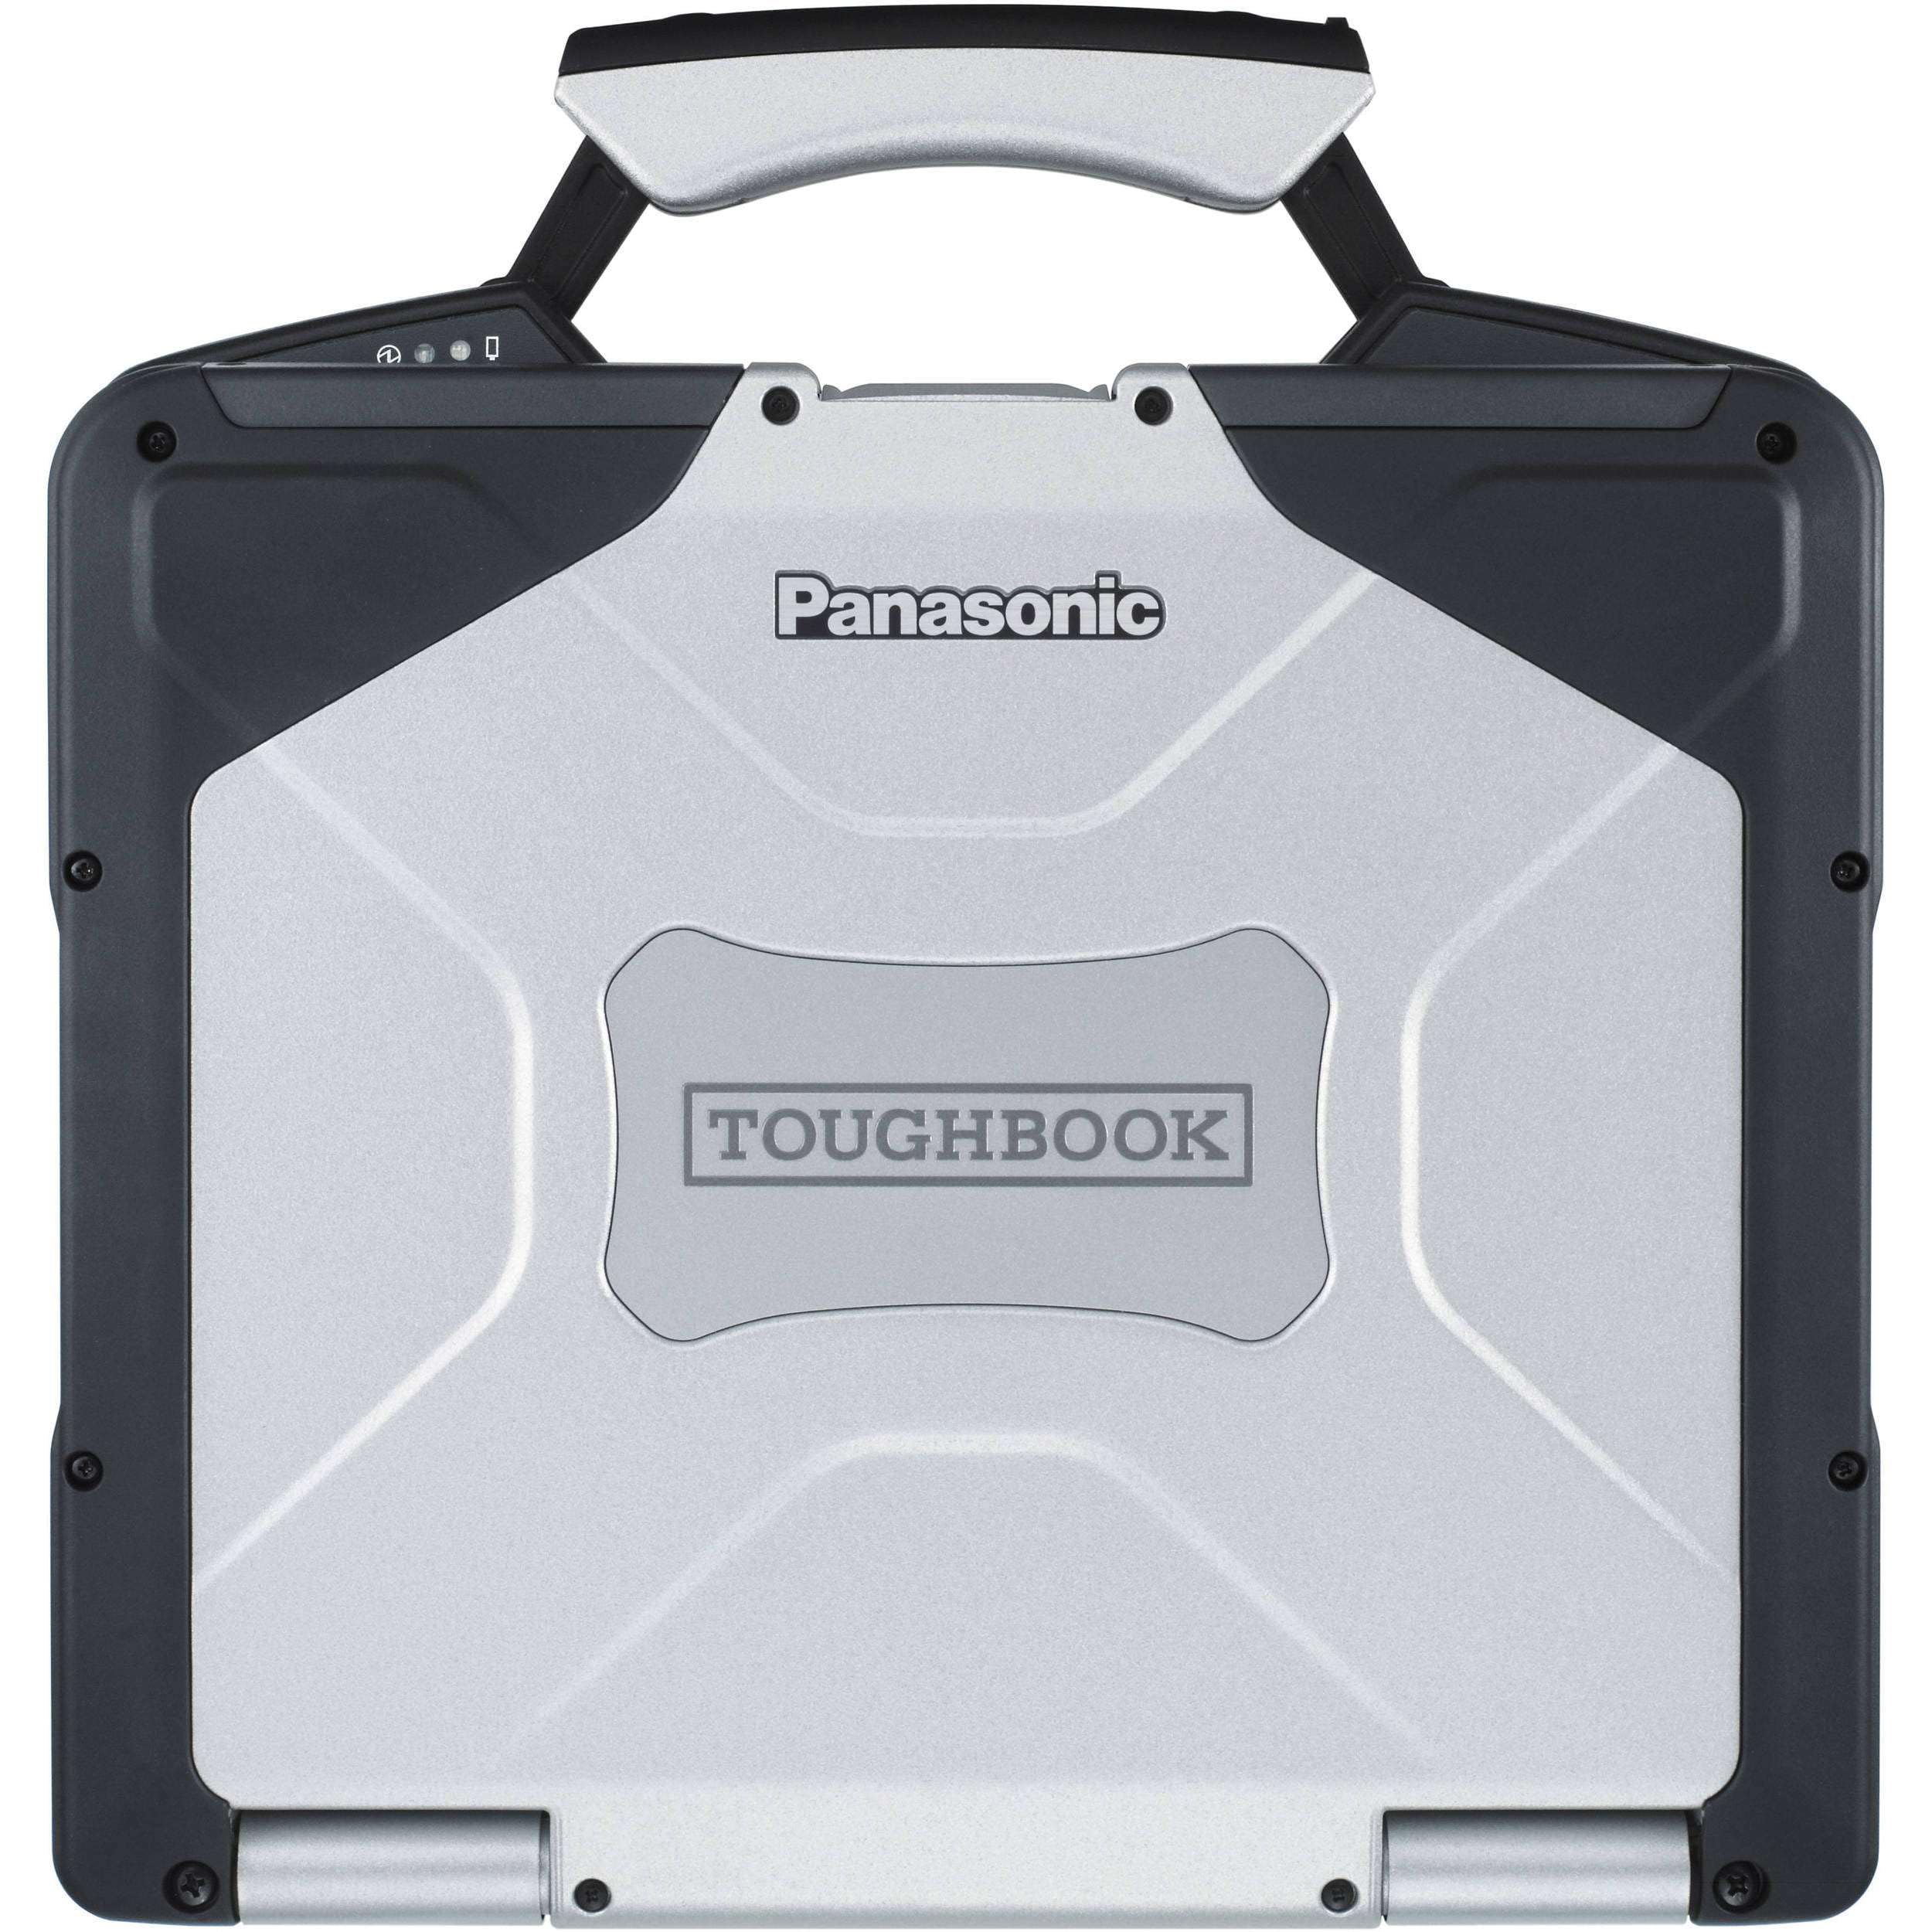 Toughbook Panasonic CF-31 MK6, 13.1 inch XGA Touchscreen Display, Intel Core i7-7600U at 2.80GHz, 32GB RAM, 1TB SSD, 4G LTE, dGPS, VGA, Serial, Windows 10 Pro (Renewed)